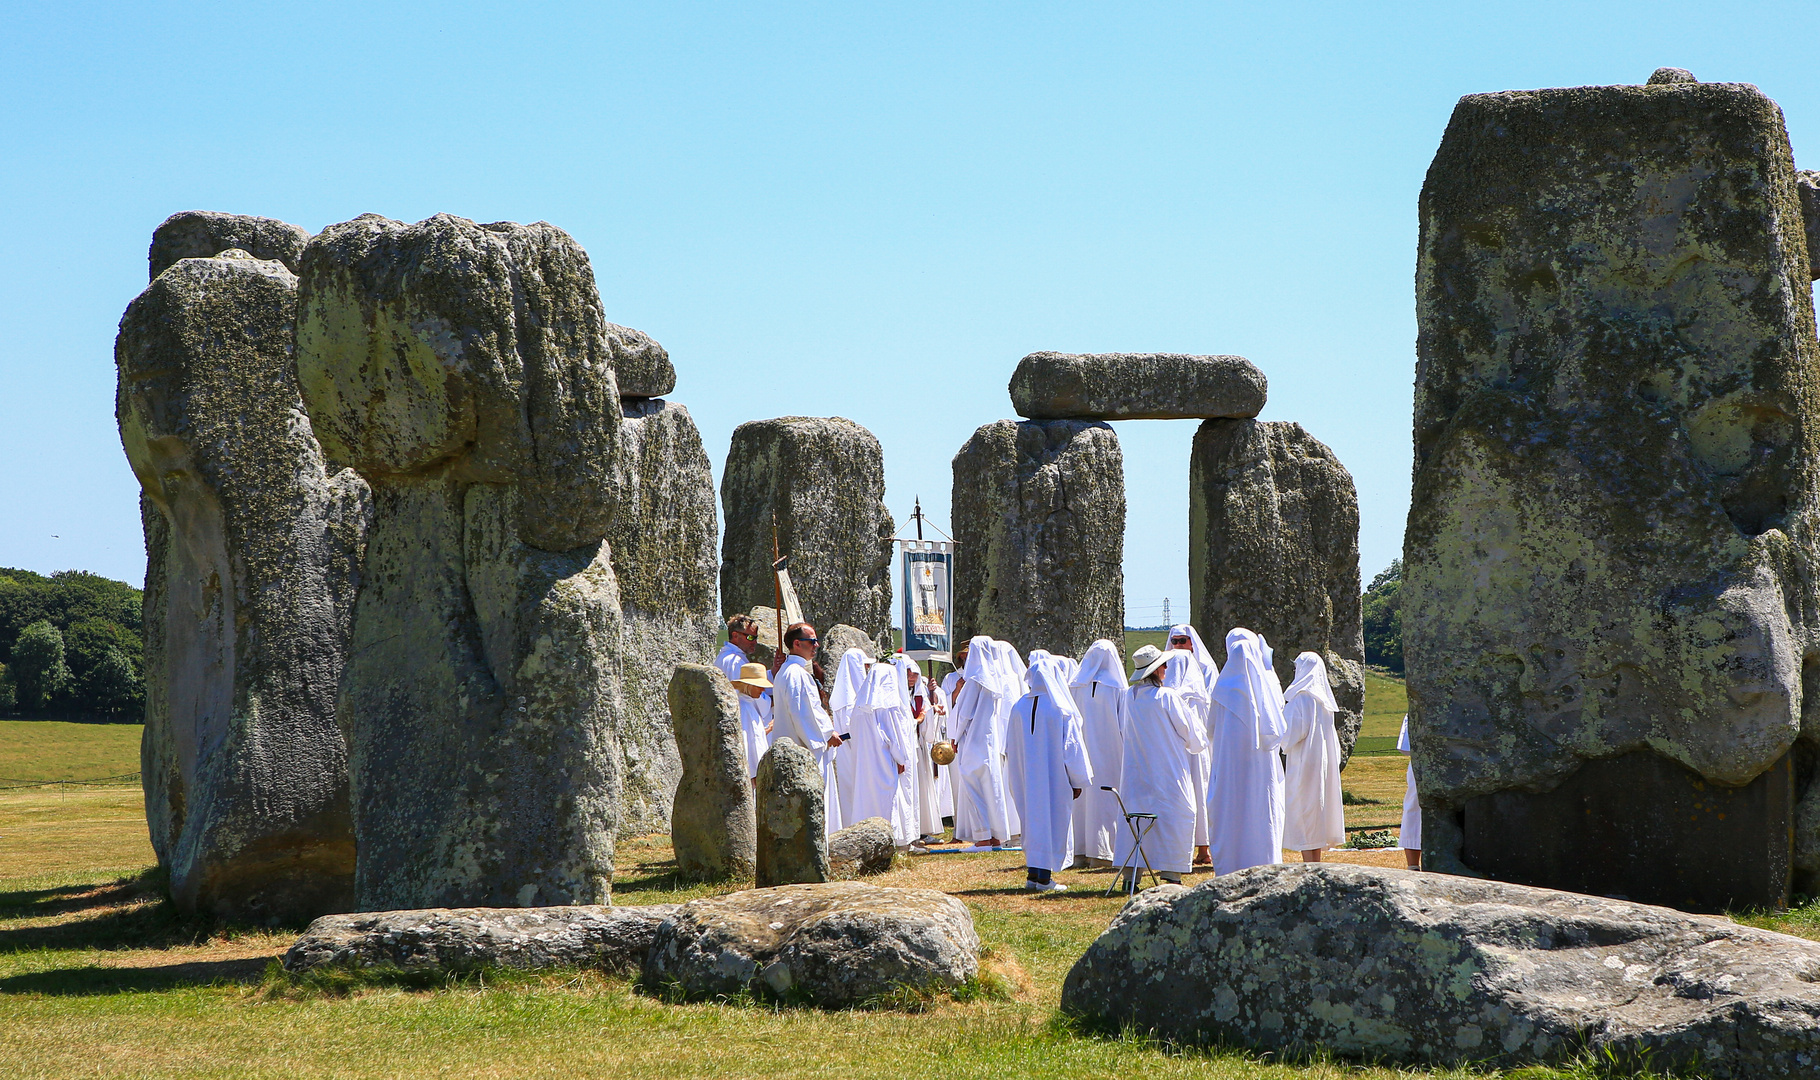 Druiden in Stonehenge